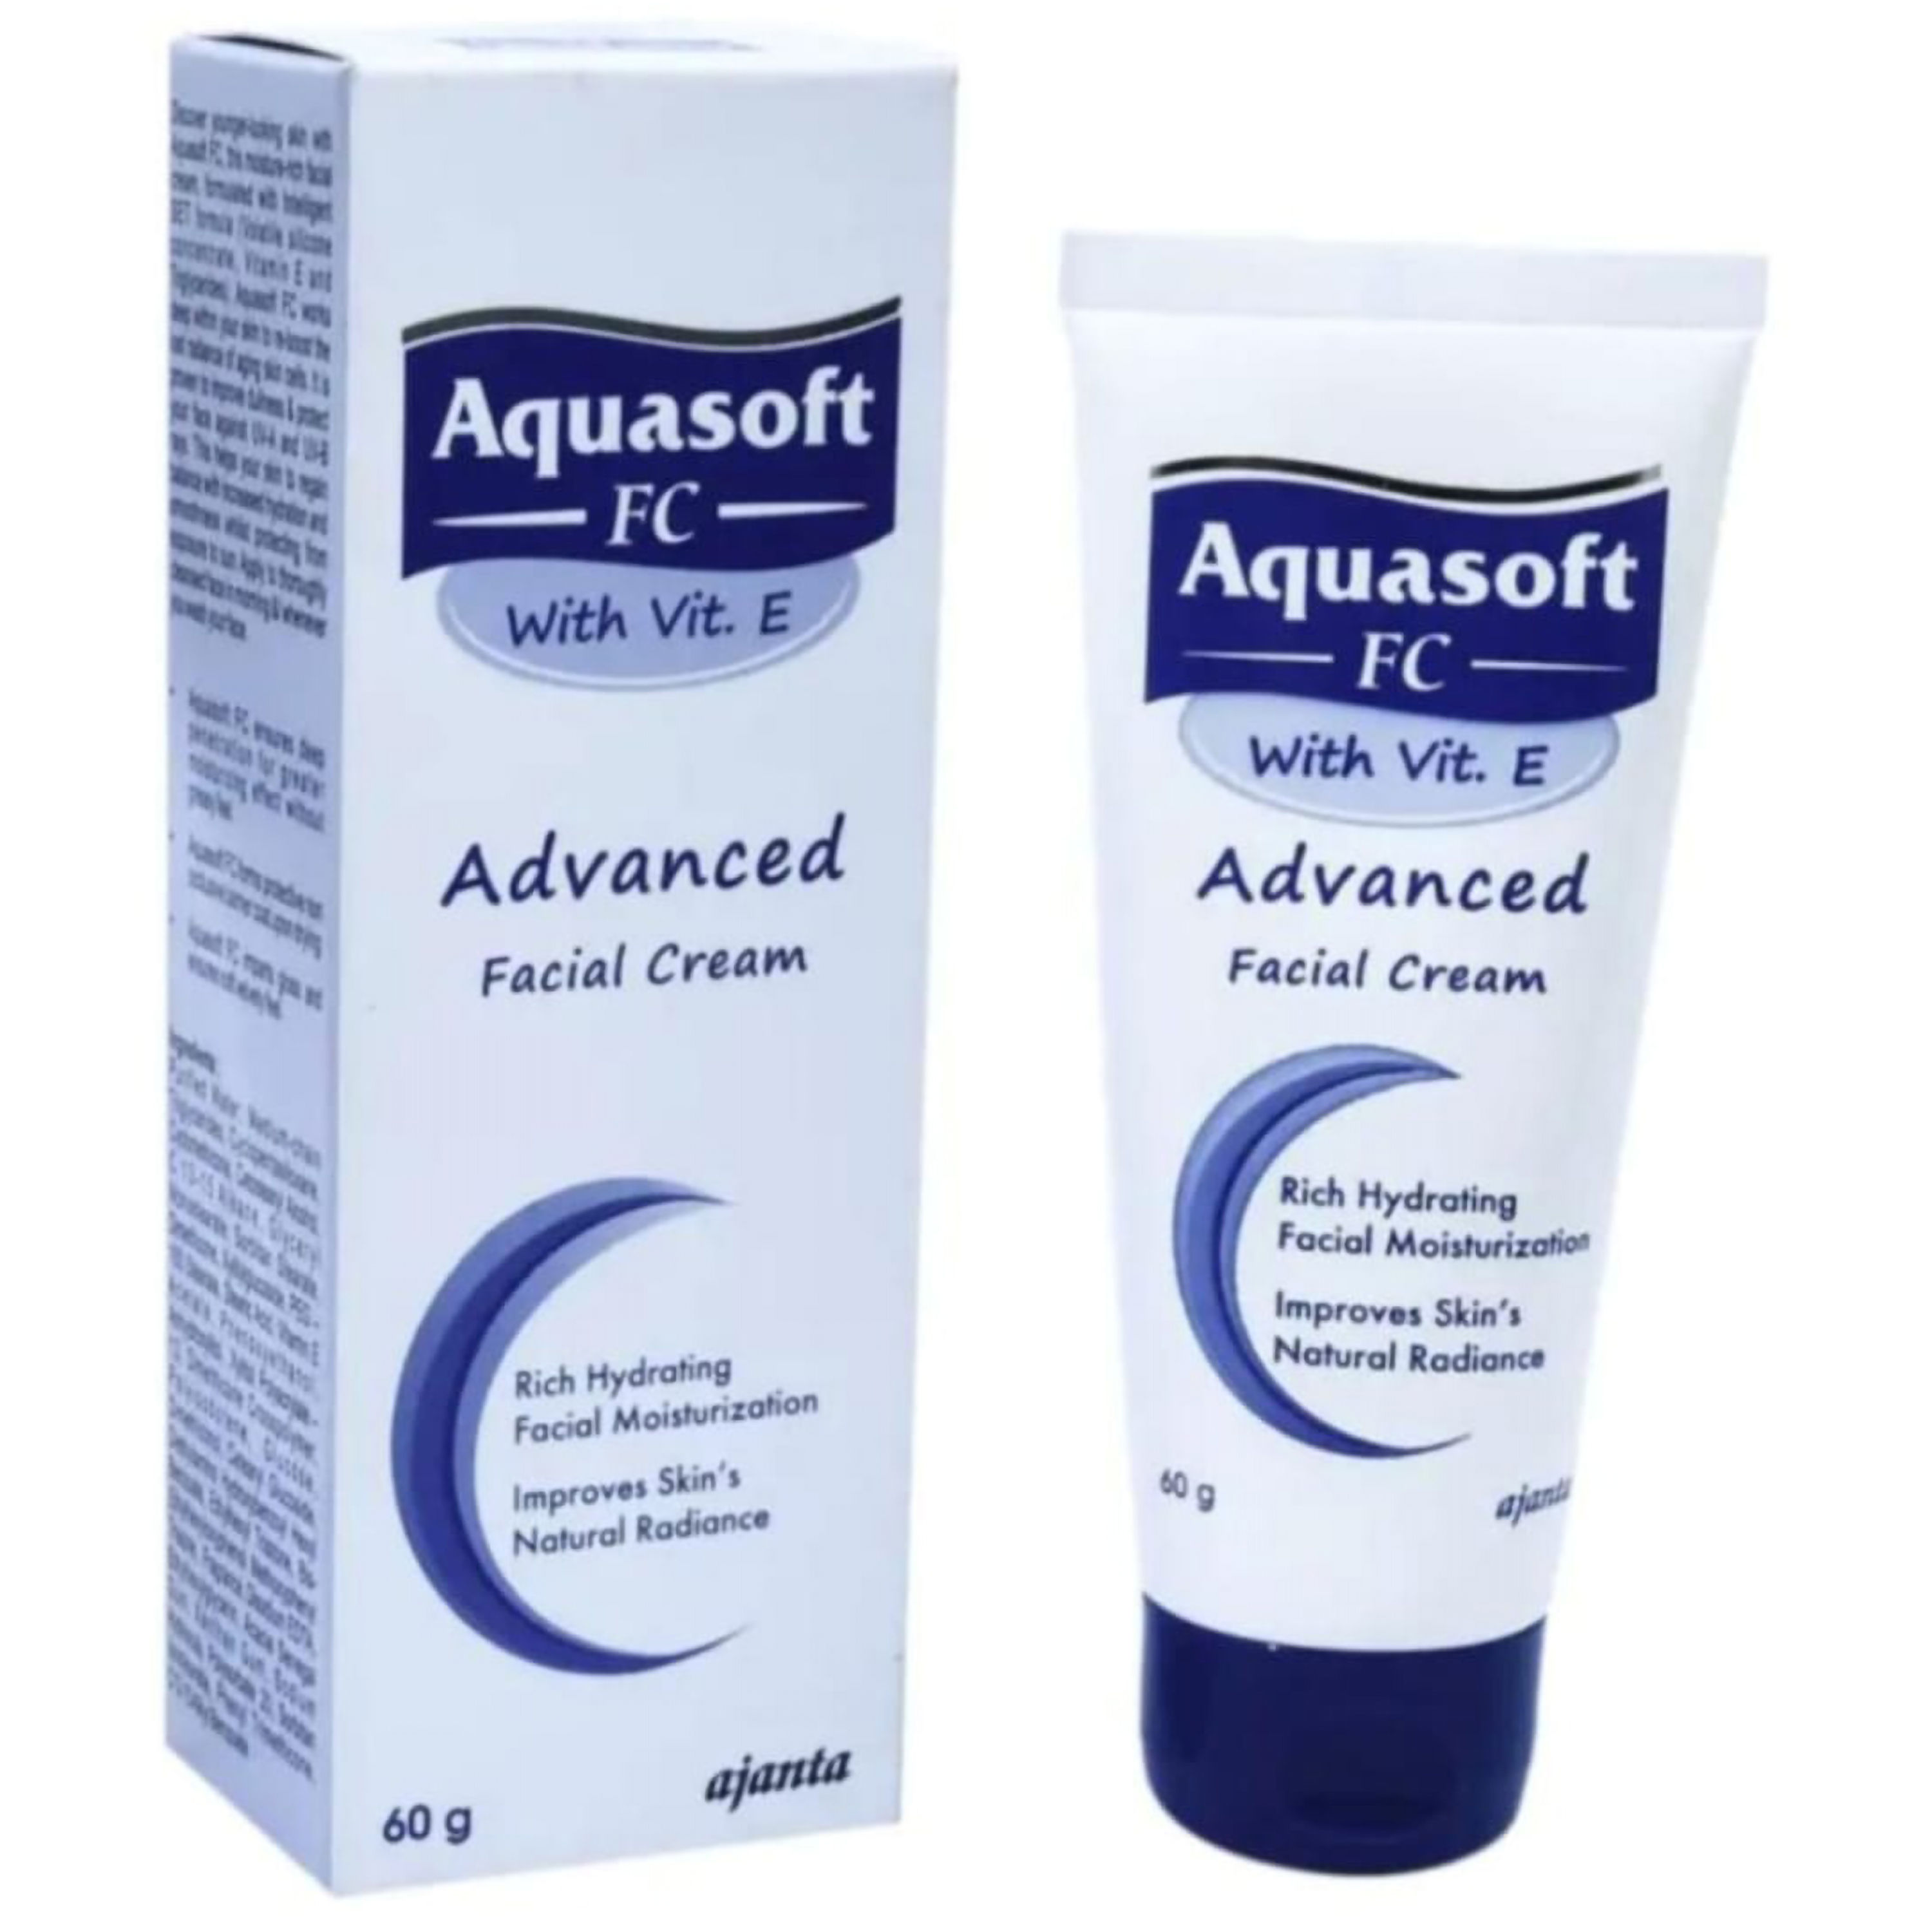 Buy Aquasoft FC Advanced Facial Cream 60 gm | With Vit E | Provides Hydration & Moisturisation Online